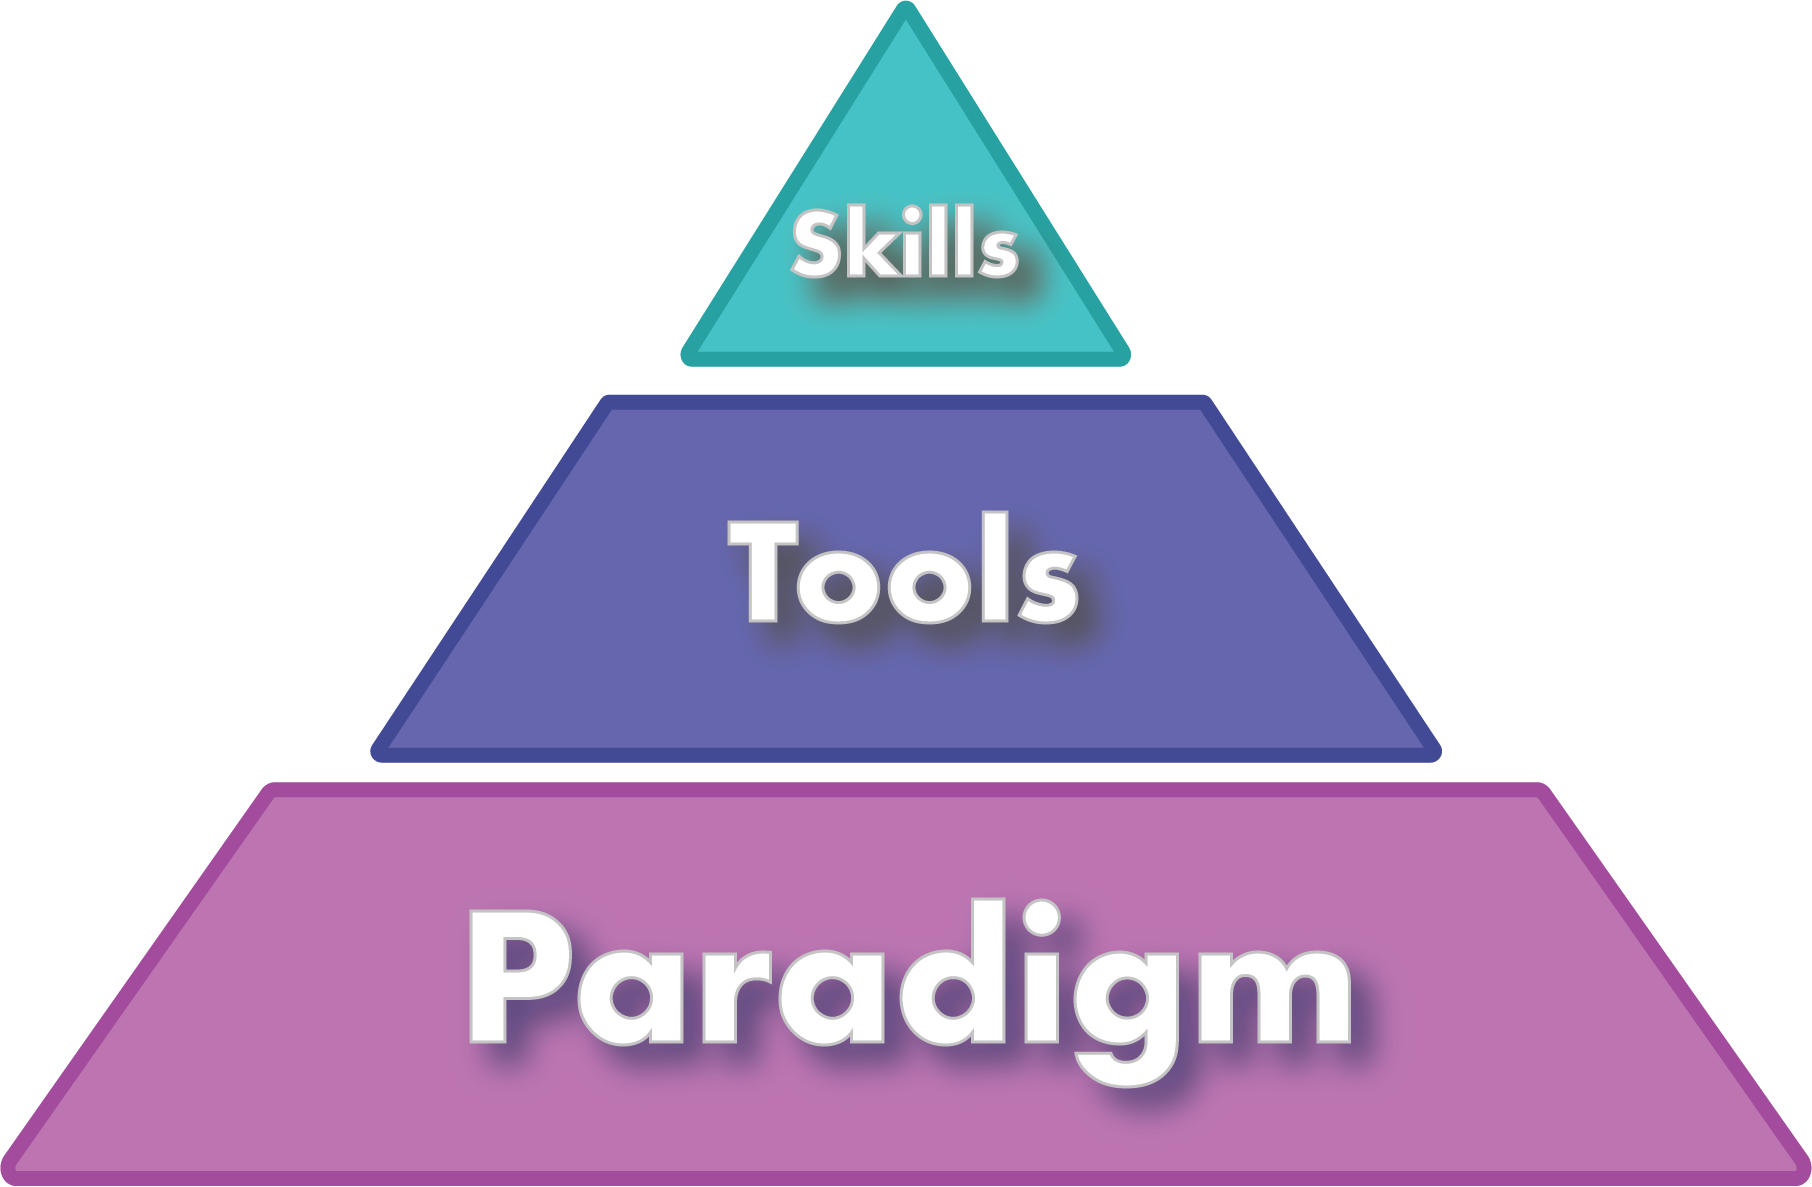 skills, tools, paradigm pyramid